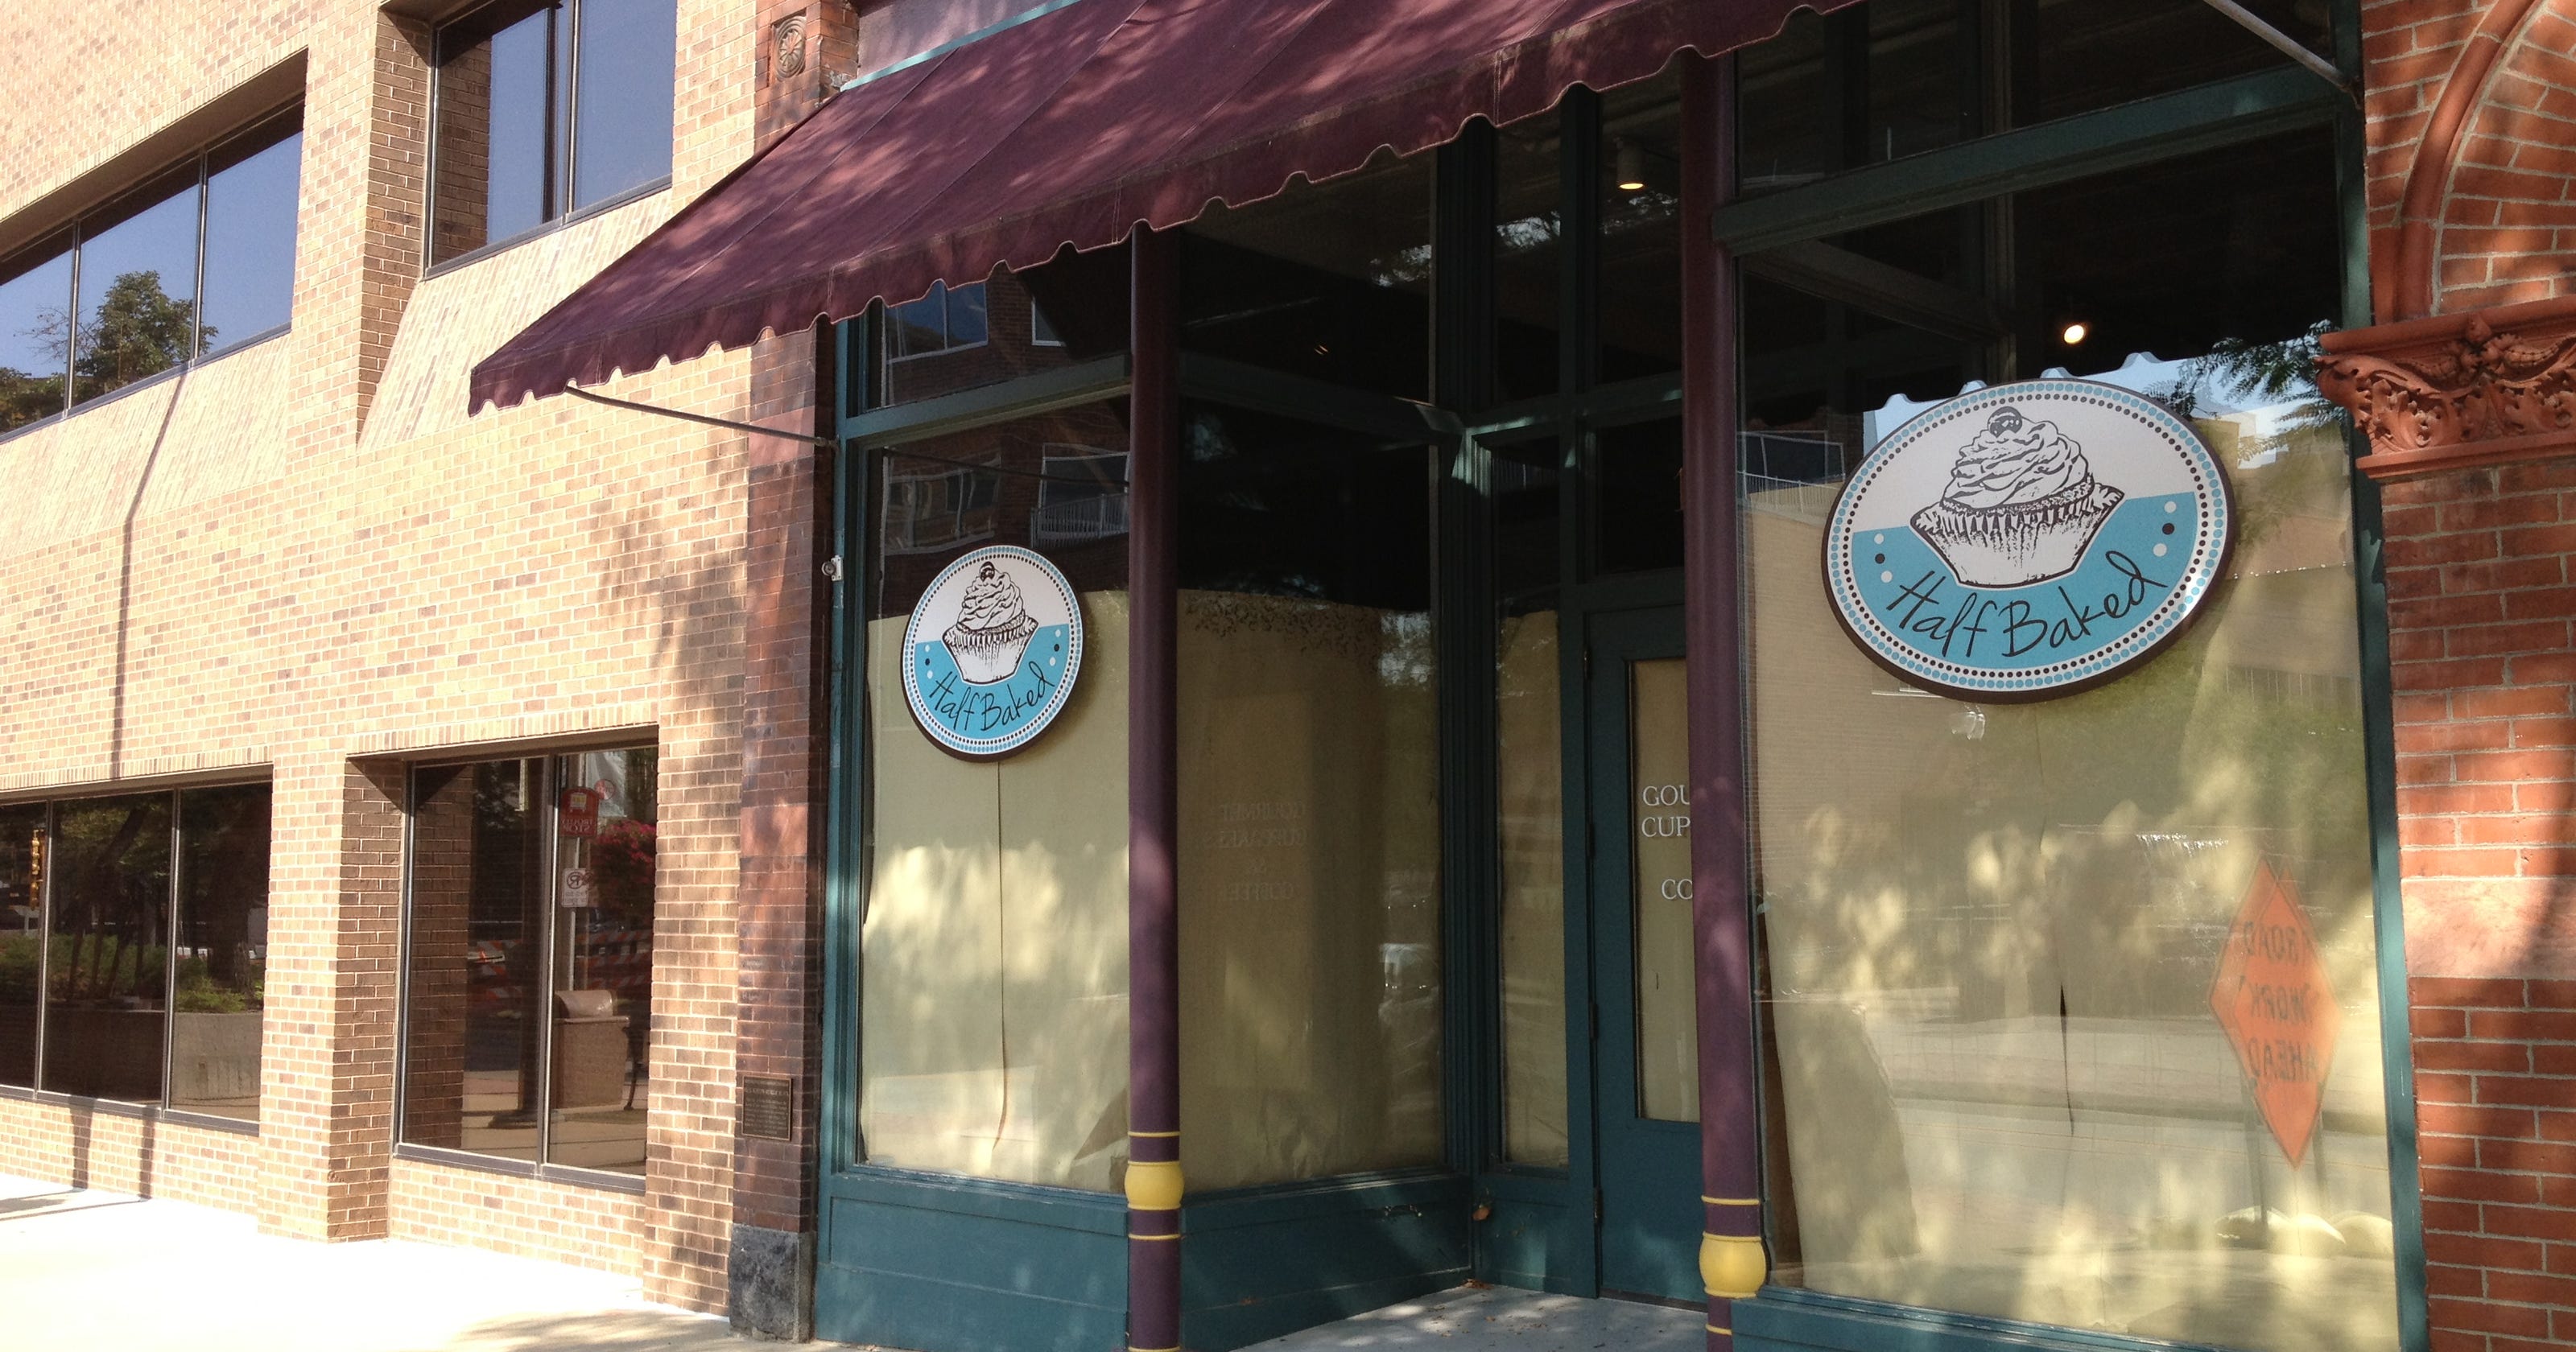 Downtown Sioux Falls draws new restaurants